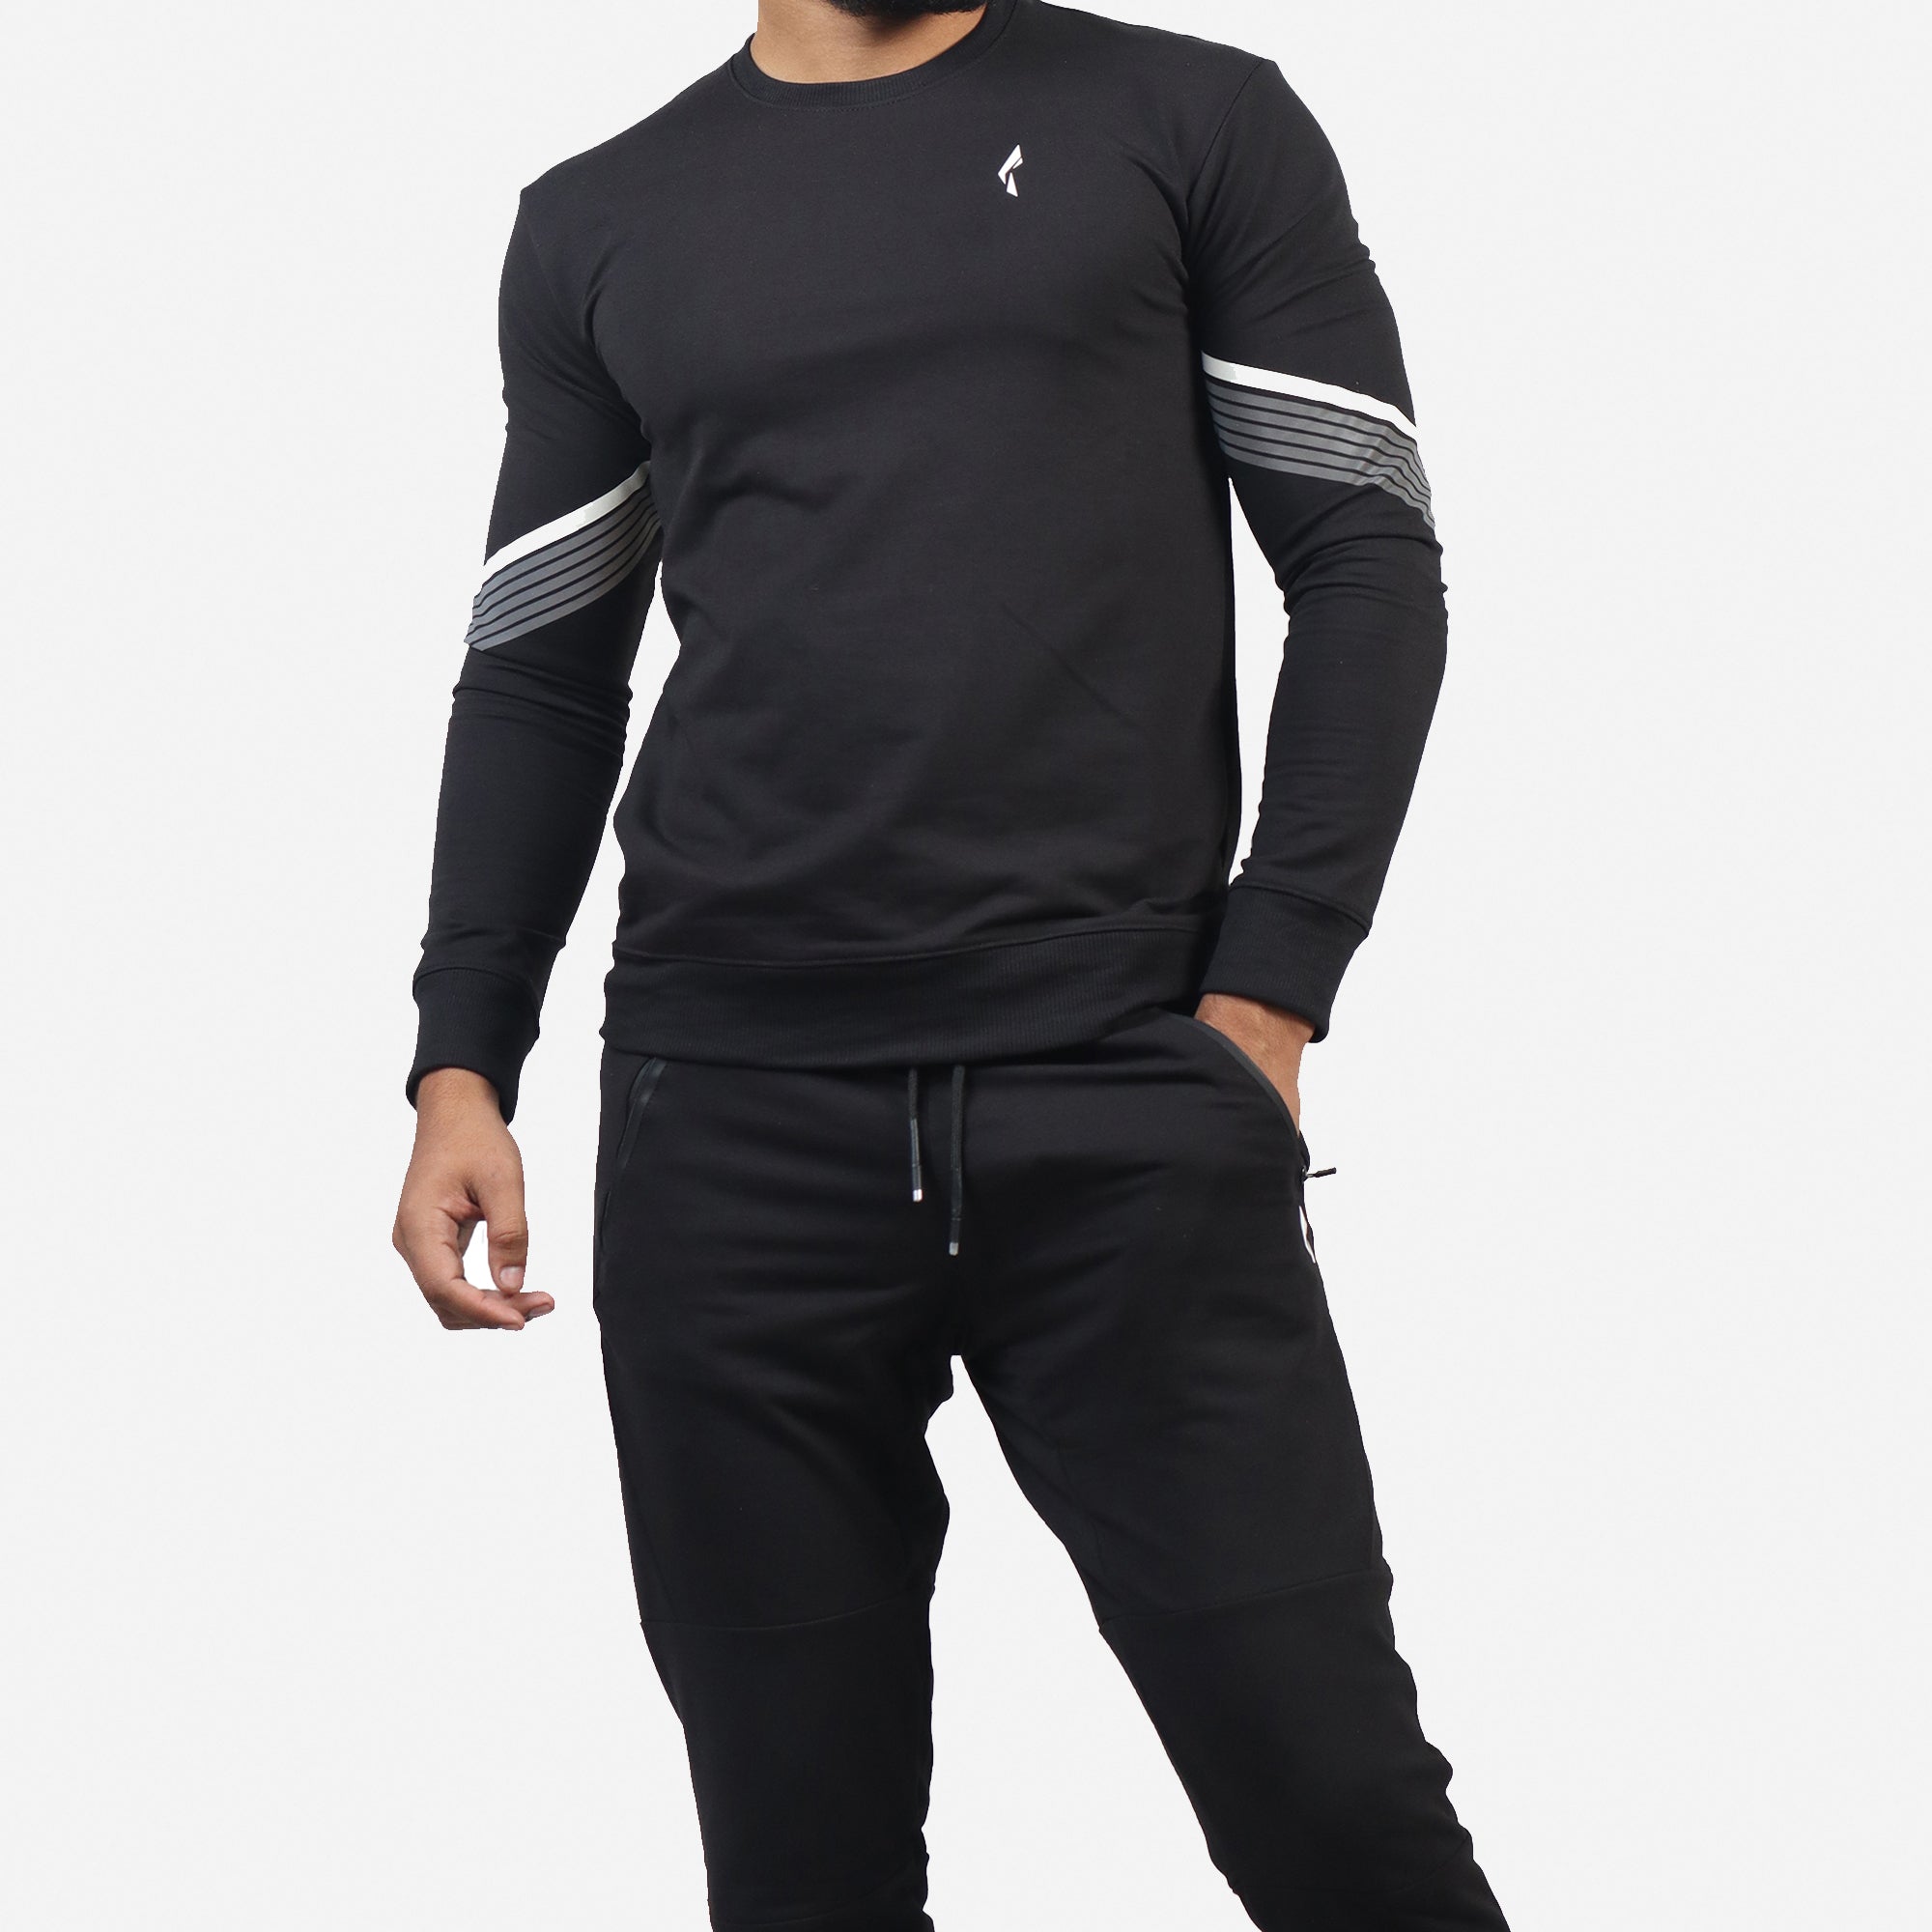 French Terry Tracksuit 2 Piece Sweatsuit Set Athletic Suit - Black